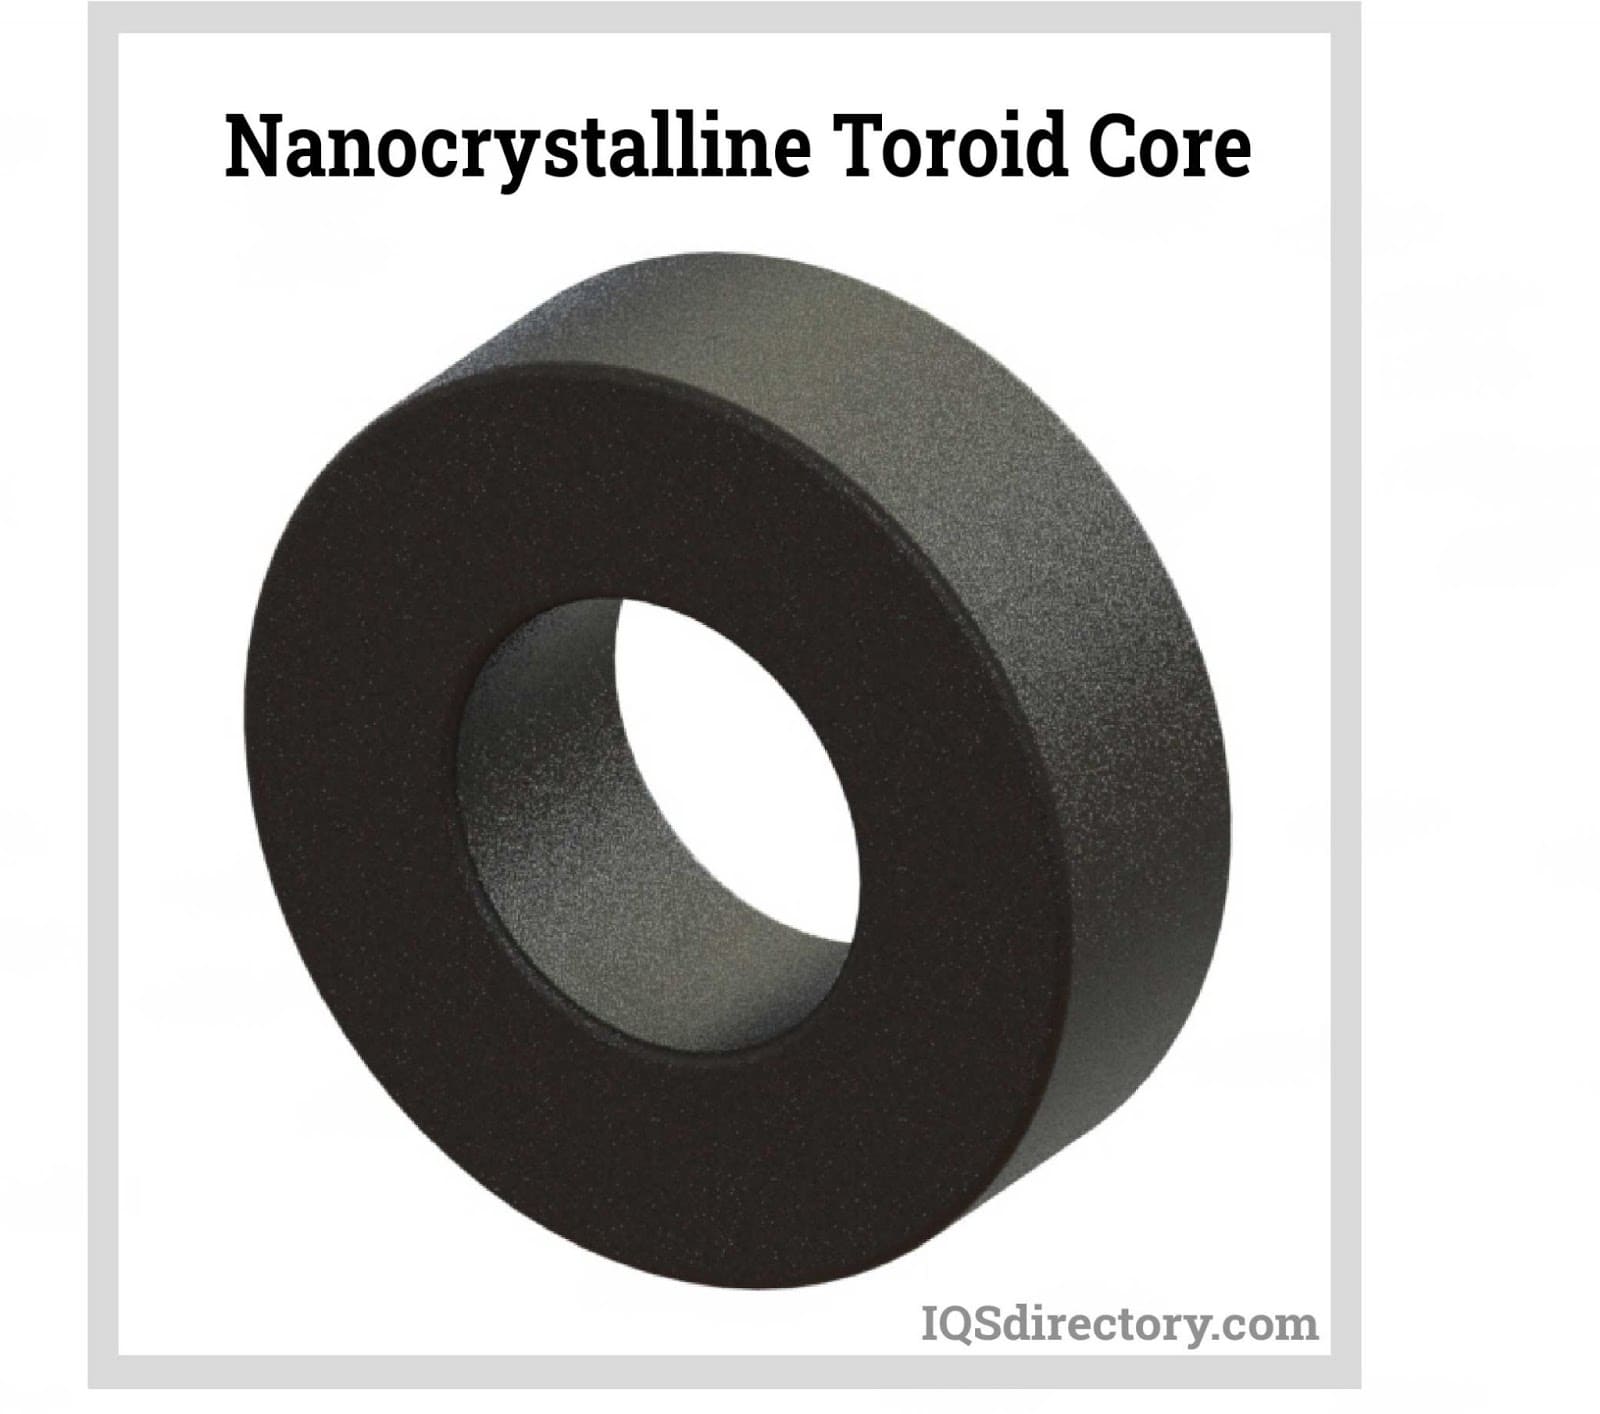 Nanocrystalline Toroid Core